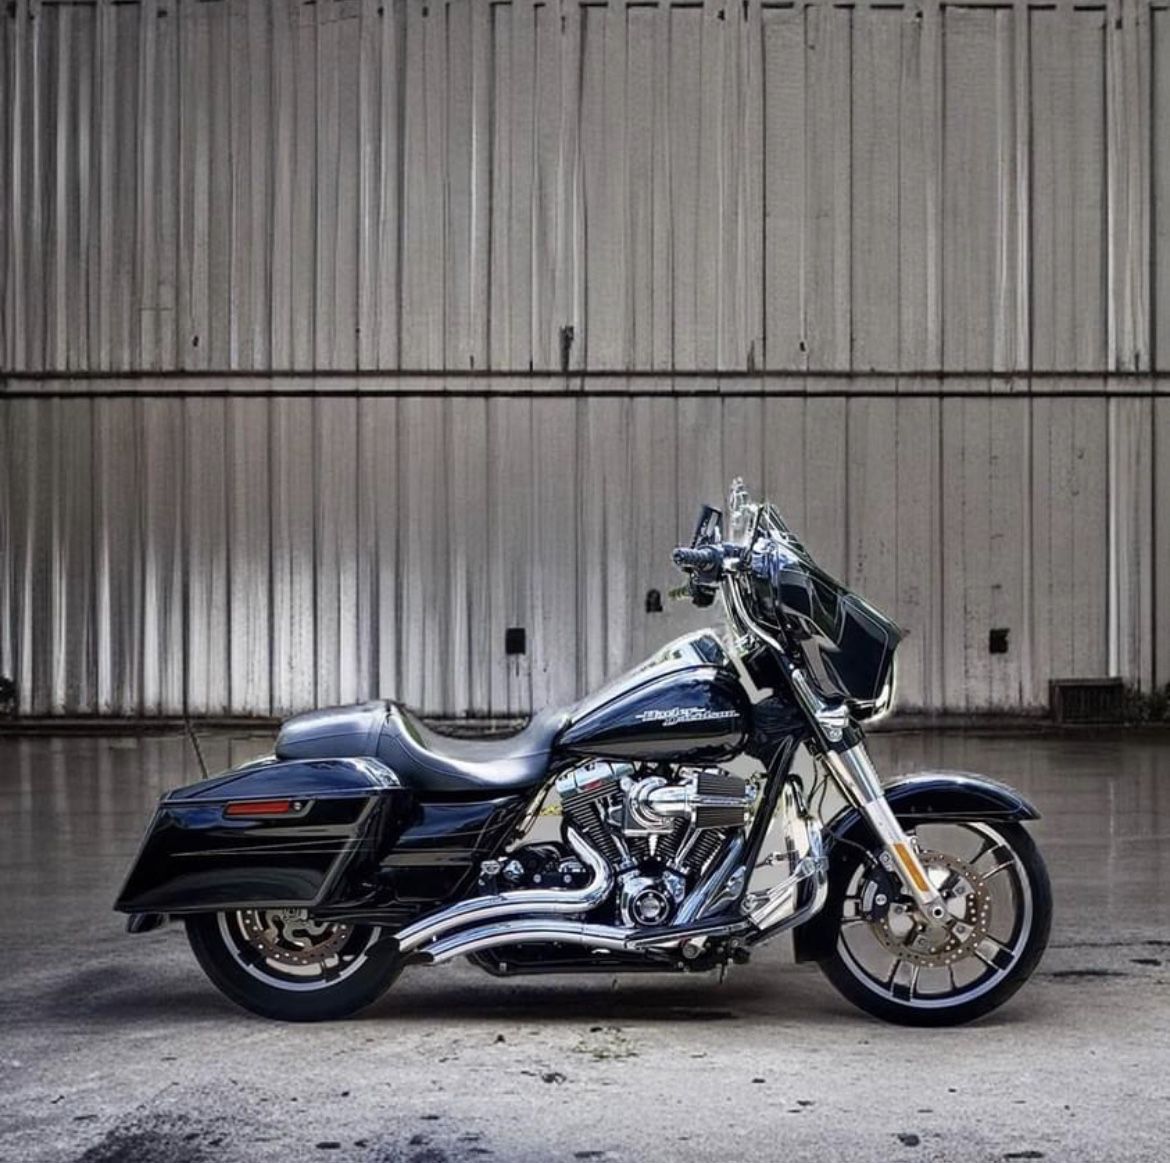 2014 Harley Davidson Street glide special